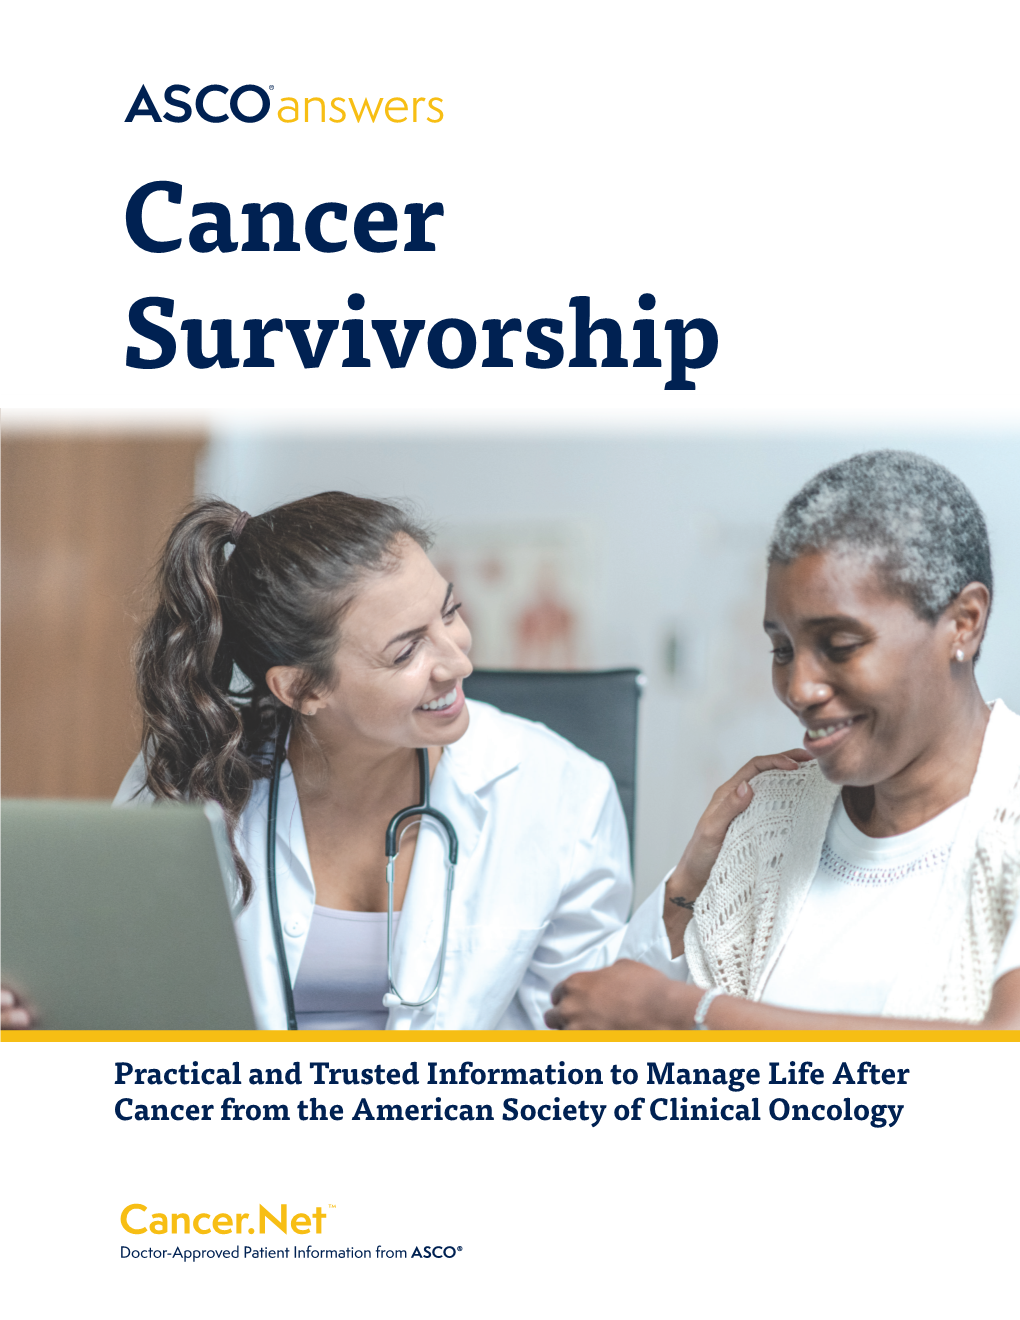 ASCO Answers: Cancer Survivorship